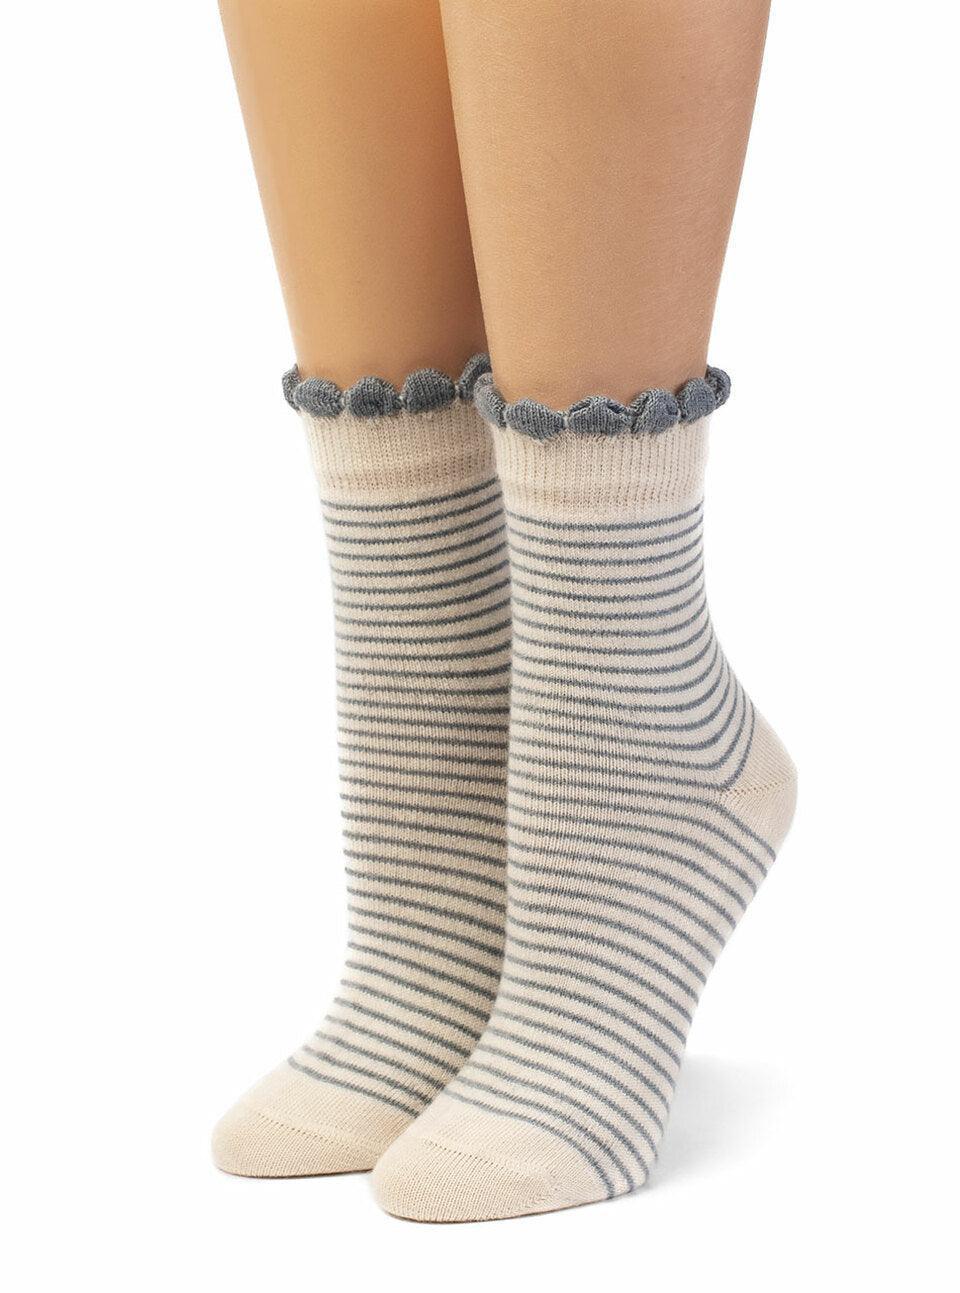 Breton Striped - Baby Alpaca & Bamboo Bootie / Dress Socks - Warrior Alpaca - The Sock Monster